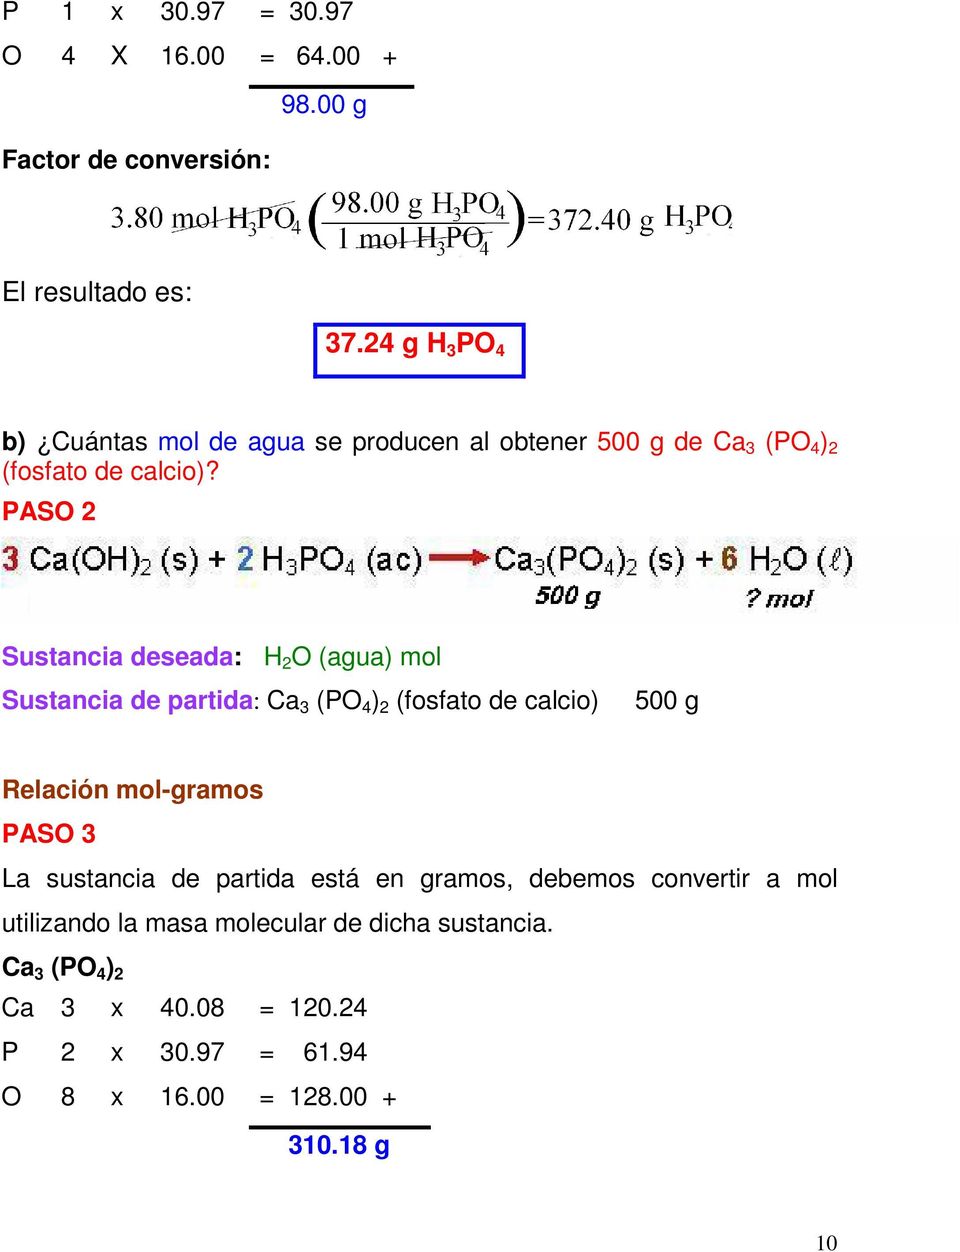 PASO 2 Sustancia deseada: H 2 O (agua) mol Sustancia de partida: Ca 3 (PO 4 ) 2 (fosfato de calcio) 500 g Relación mol-gramos PASO 3